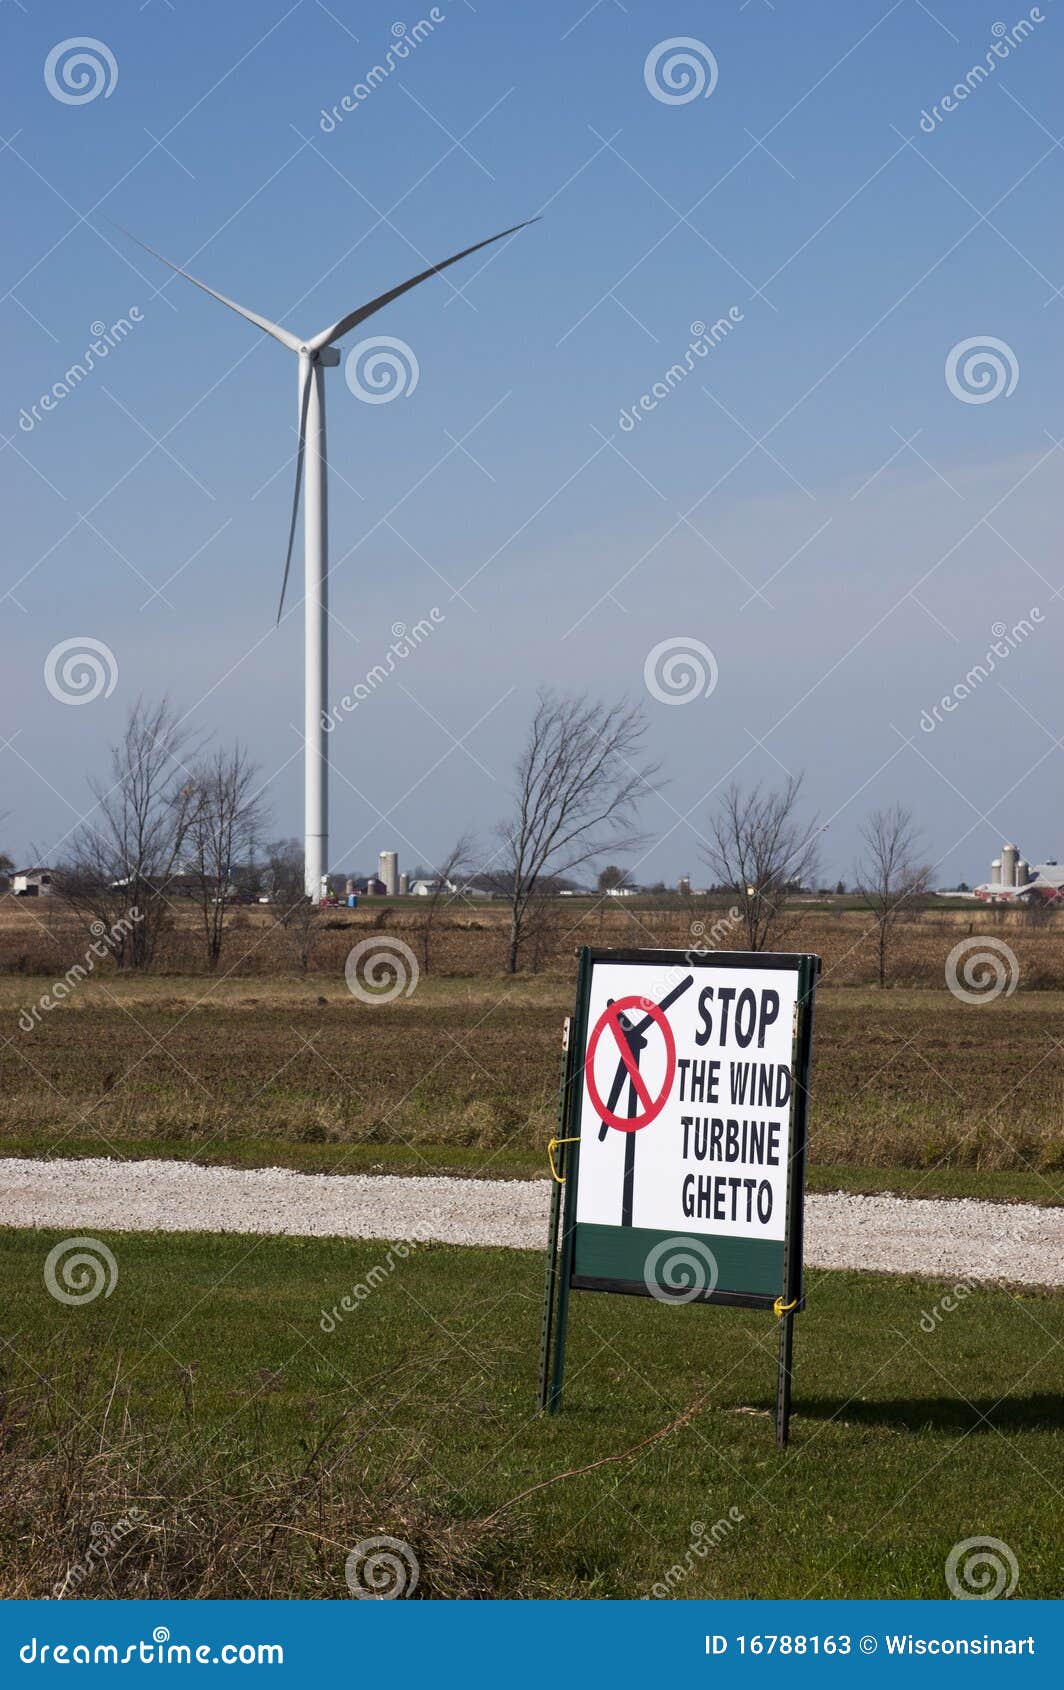 Anti Windmill Turbine Protest Green Wind Energy Stock Photos - Image 